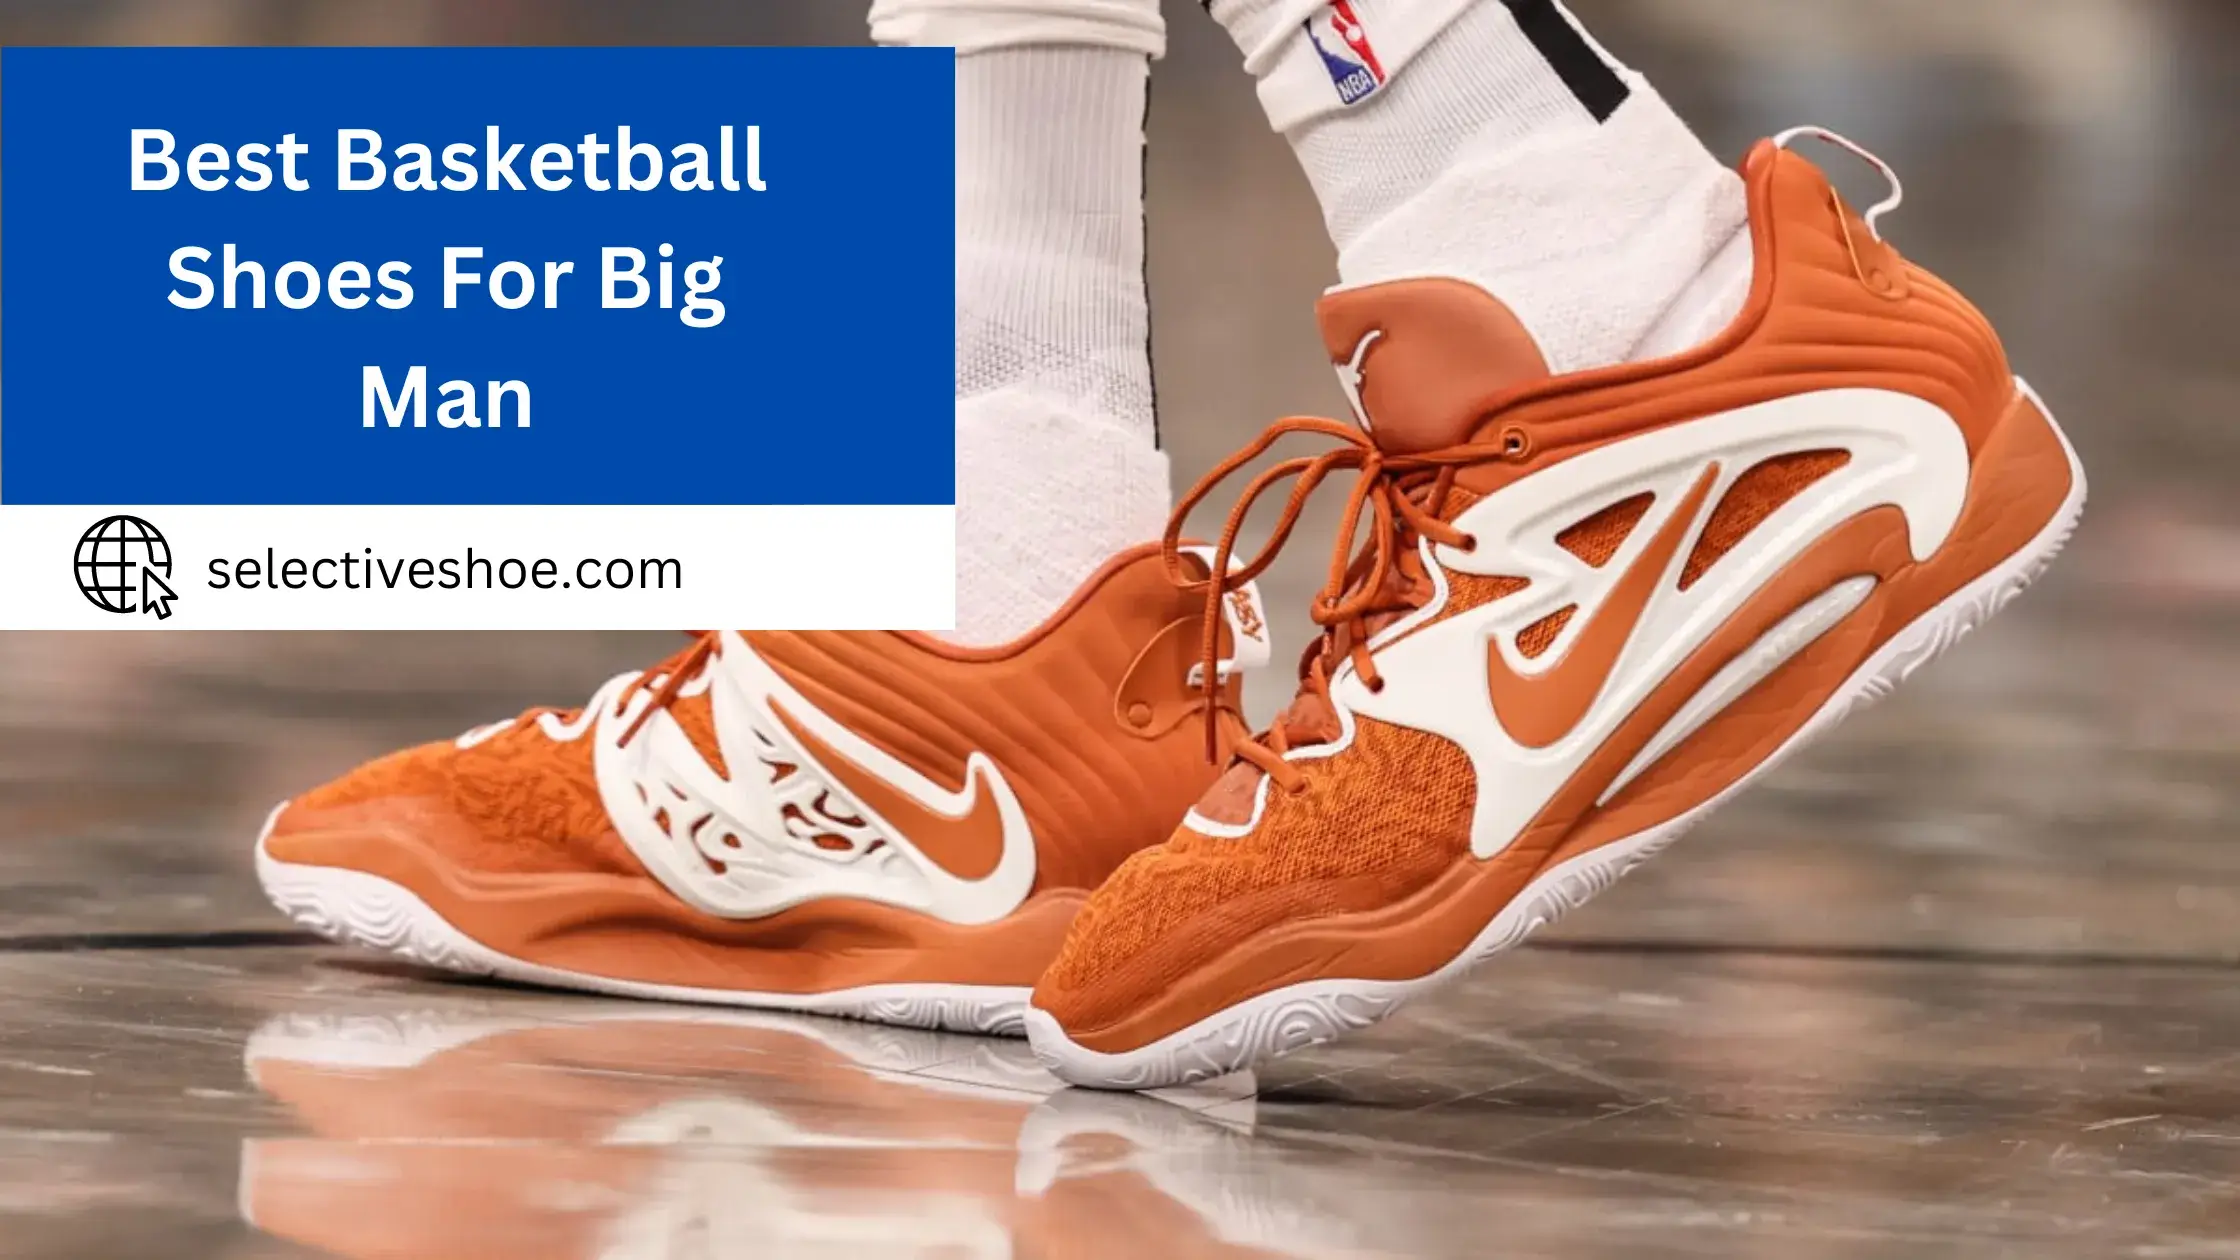 Best Basketball Shoes For Big Man - Expert Choice